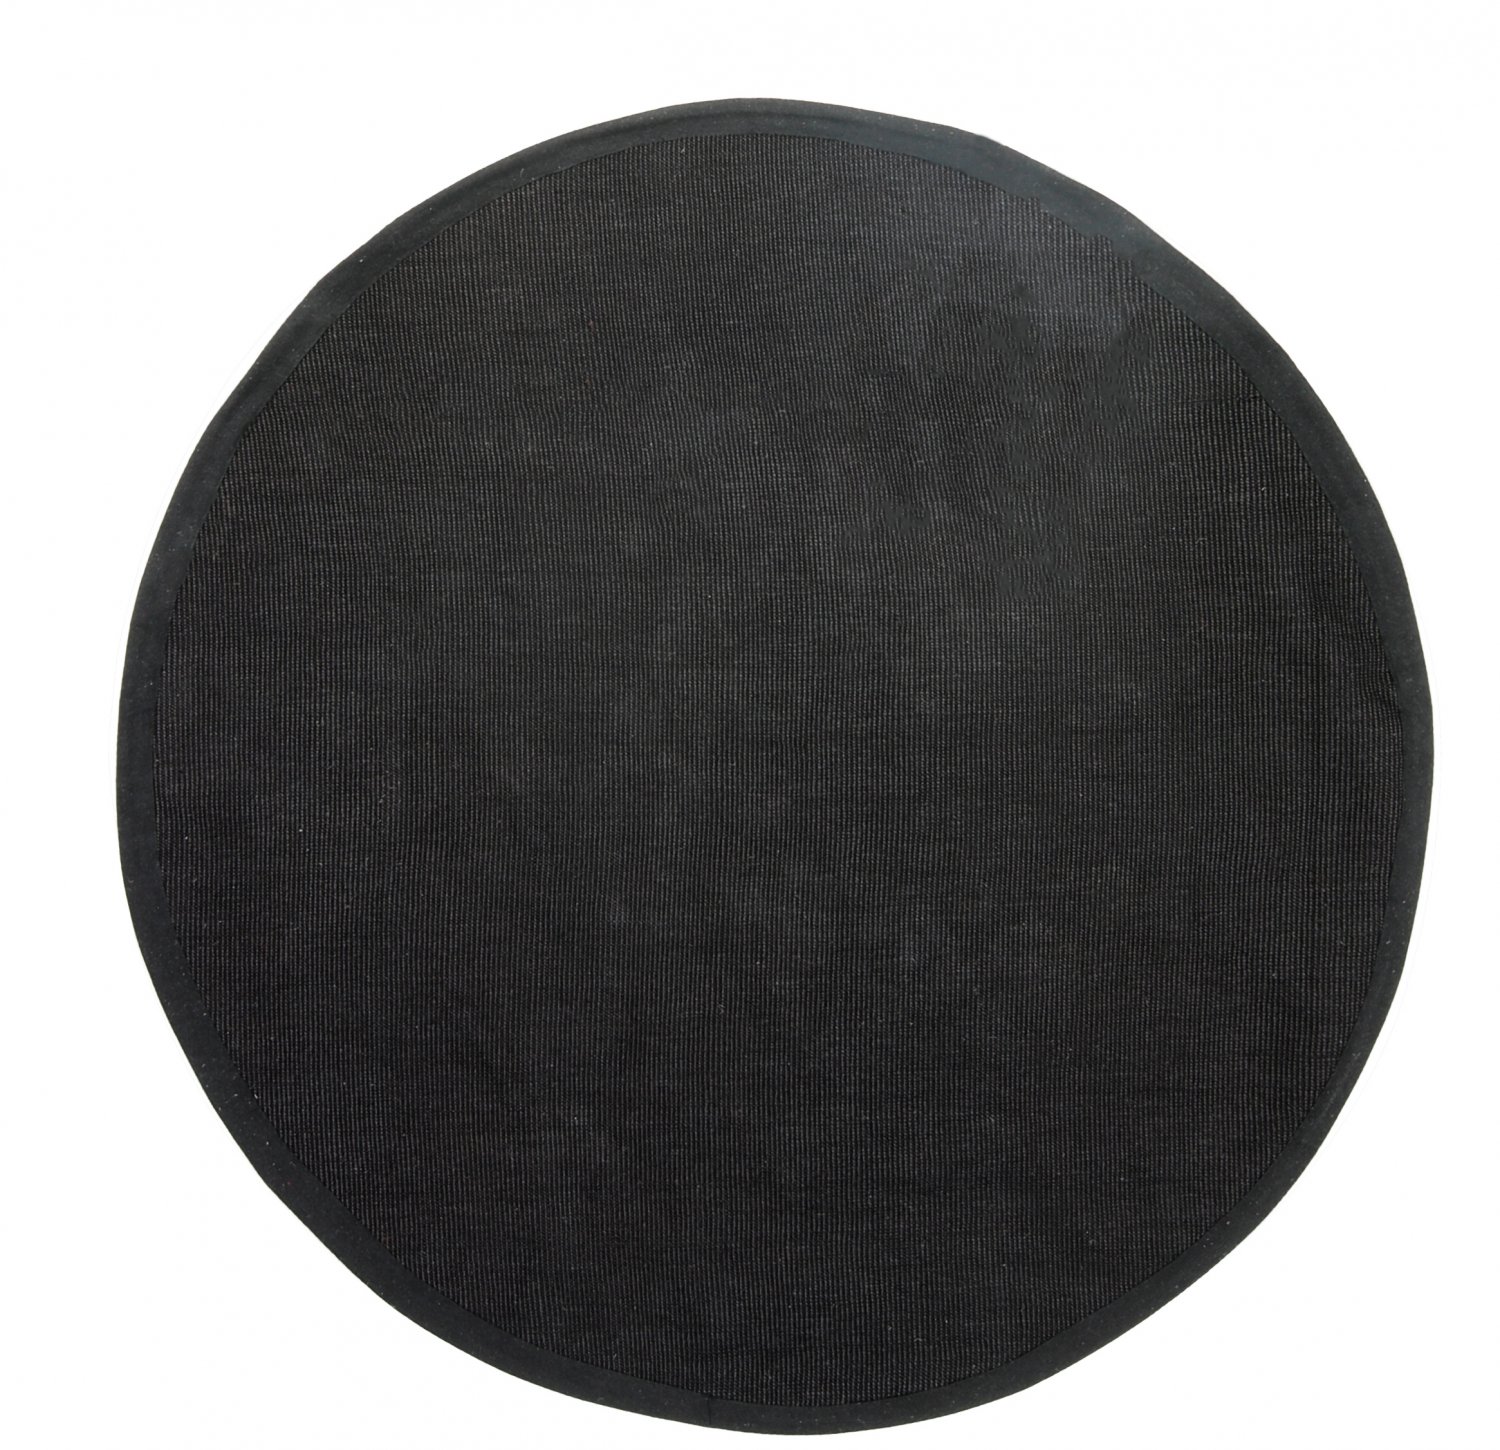 Round rug (sisal) - Agave (black)